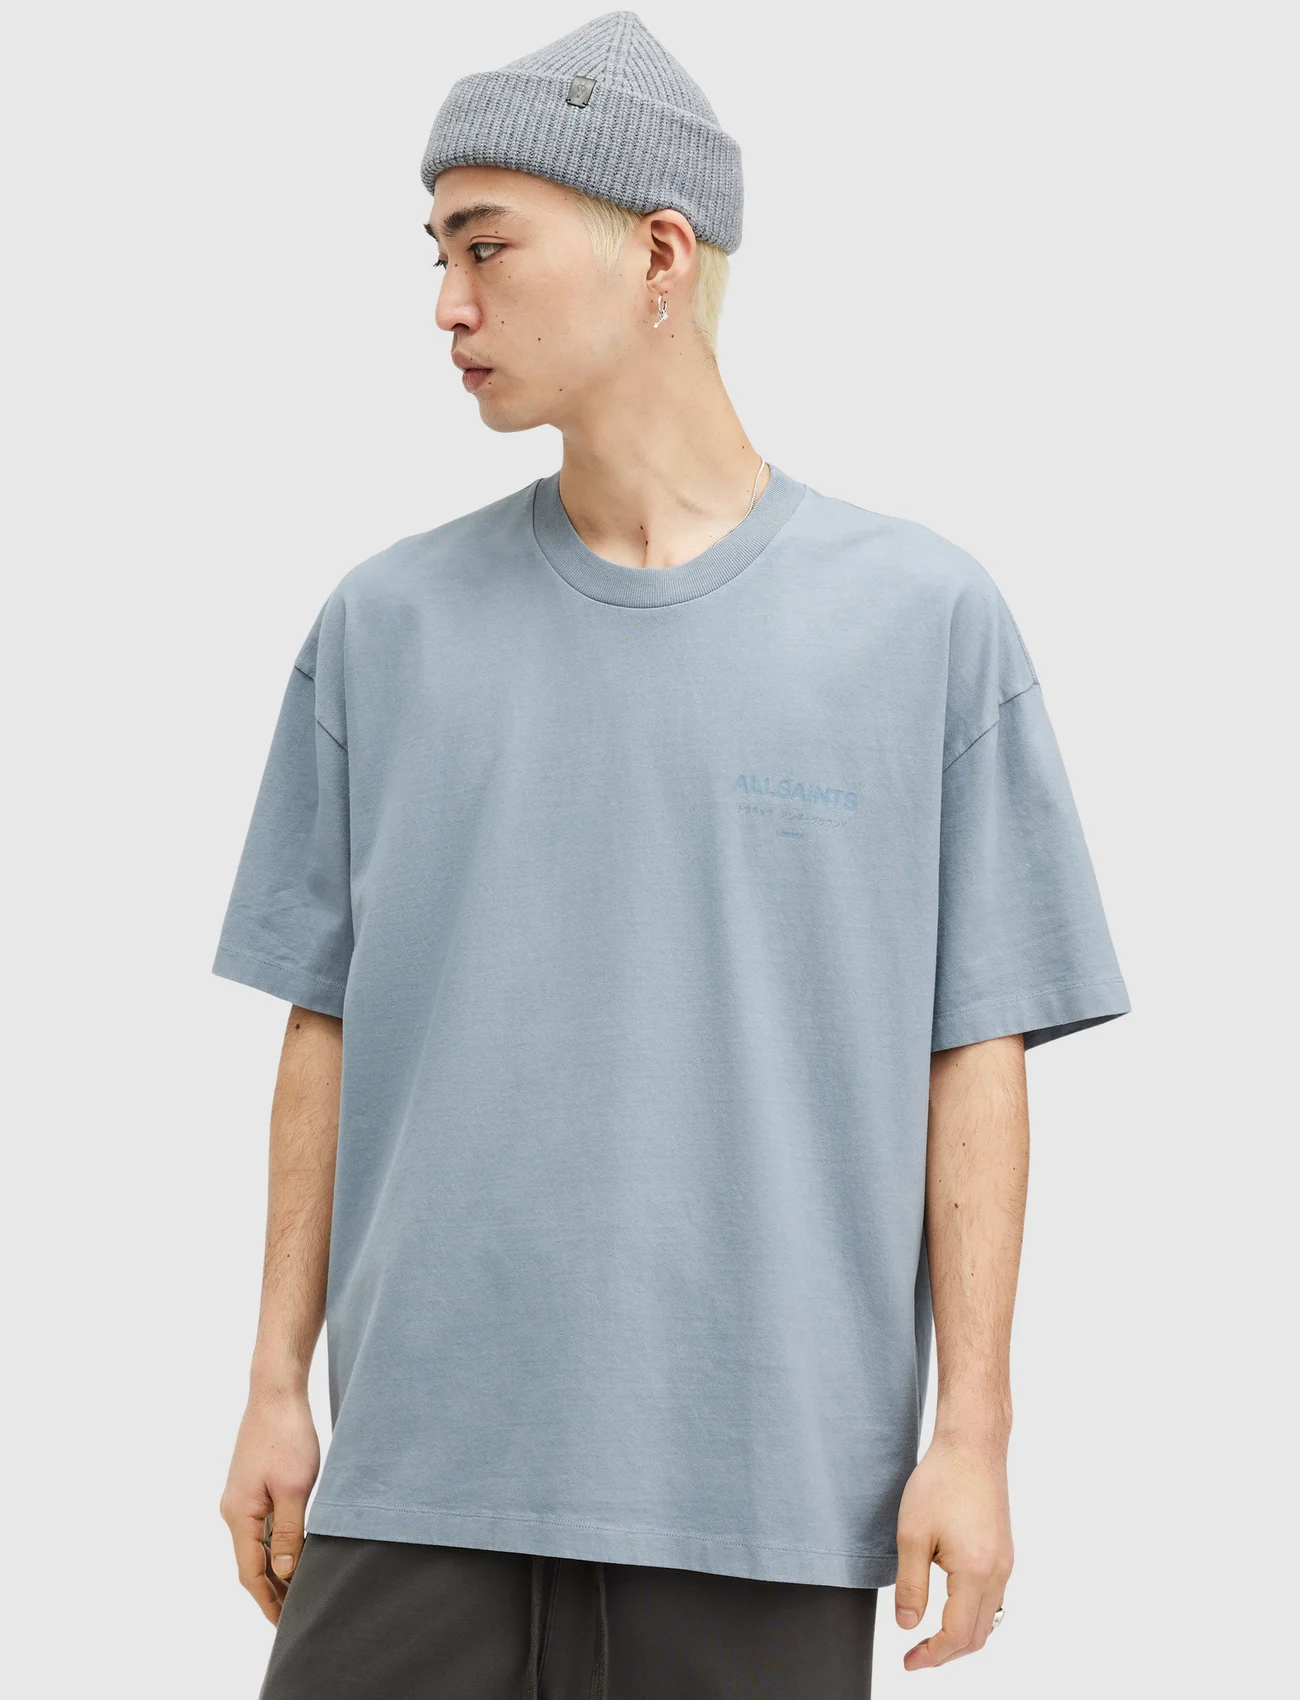 AllSaints - UNDERGROUND SS CREW - short-sleeved t-shirts - dusty blue - 1